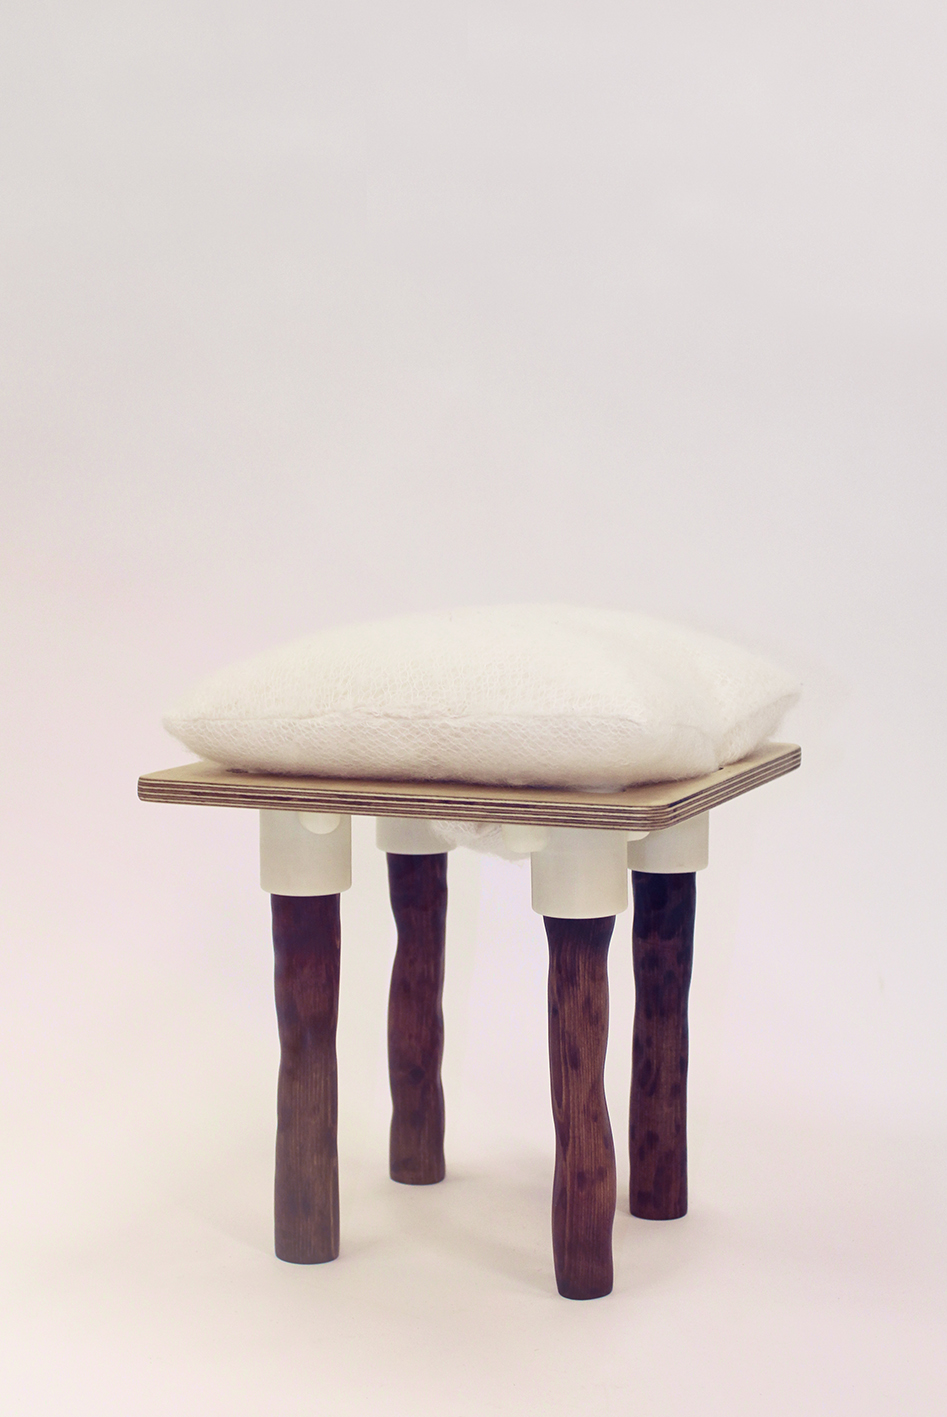 stool children's furniture seat Frankenstool 3D Printed Joints 3d printing Easy Assembling flatpack plywood Dowel wool cushion